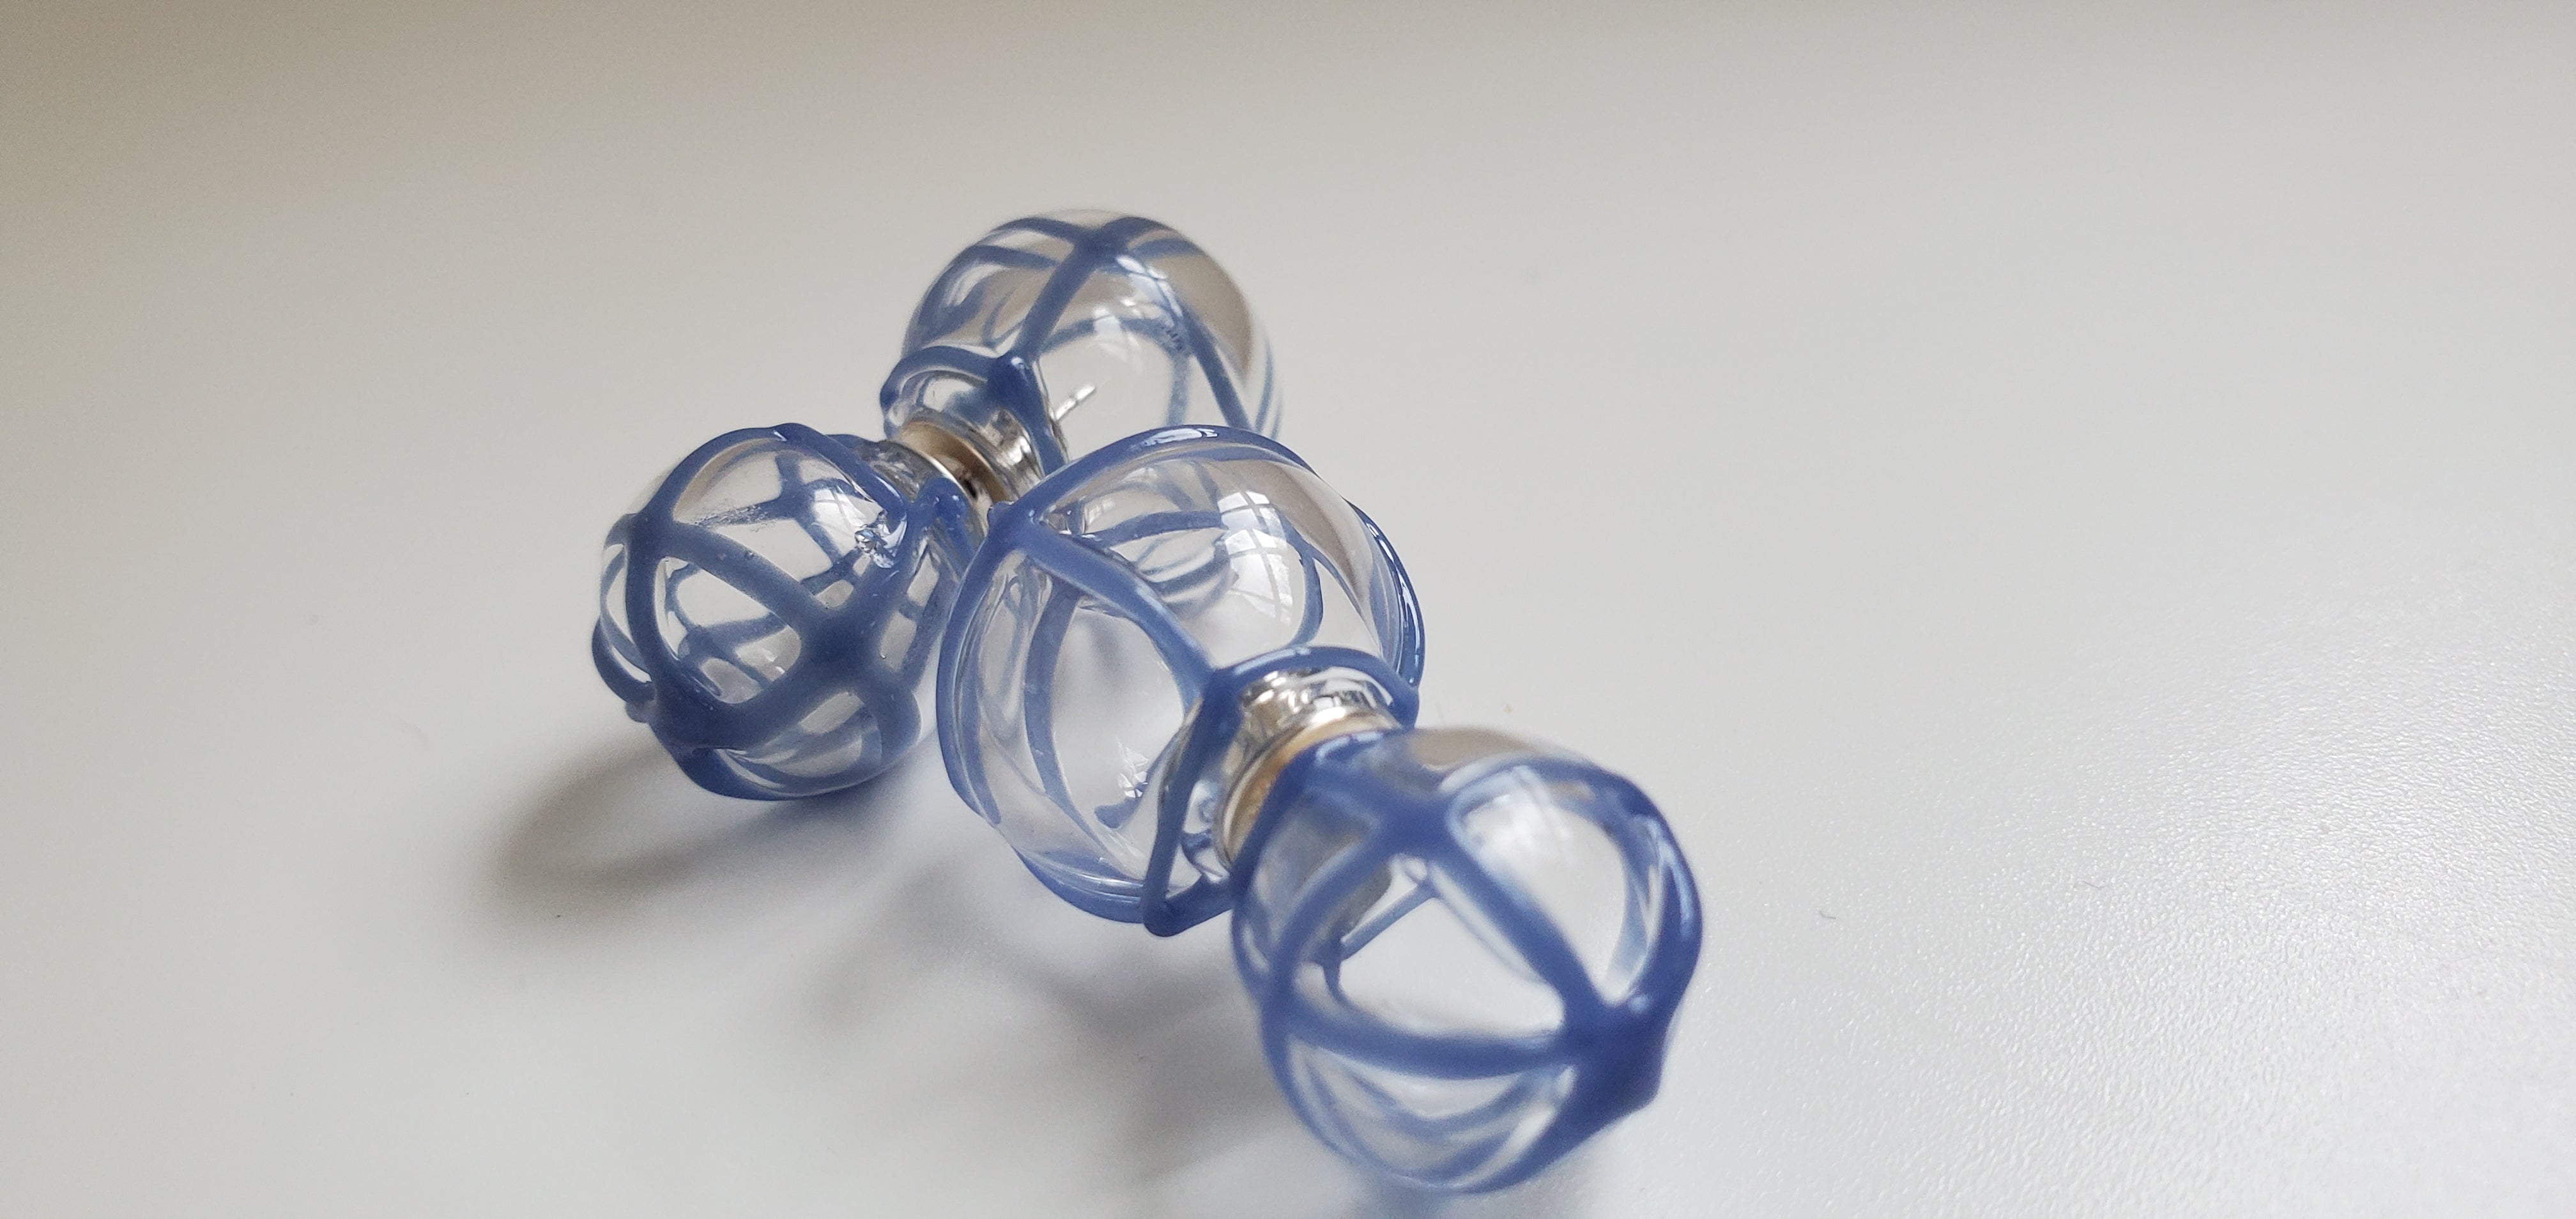 Periwinkle grid lines double sided glass bubble earrings